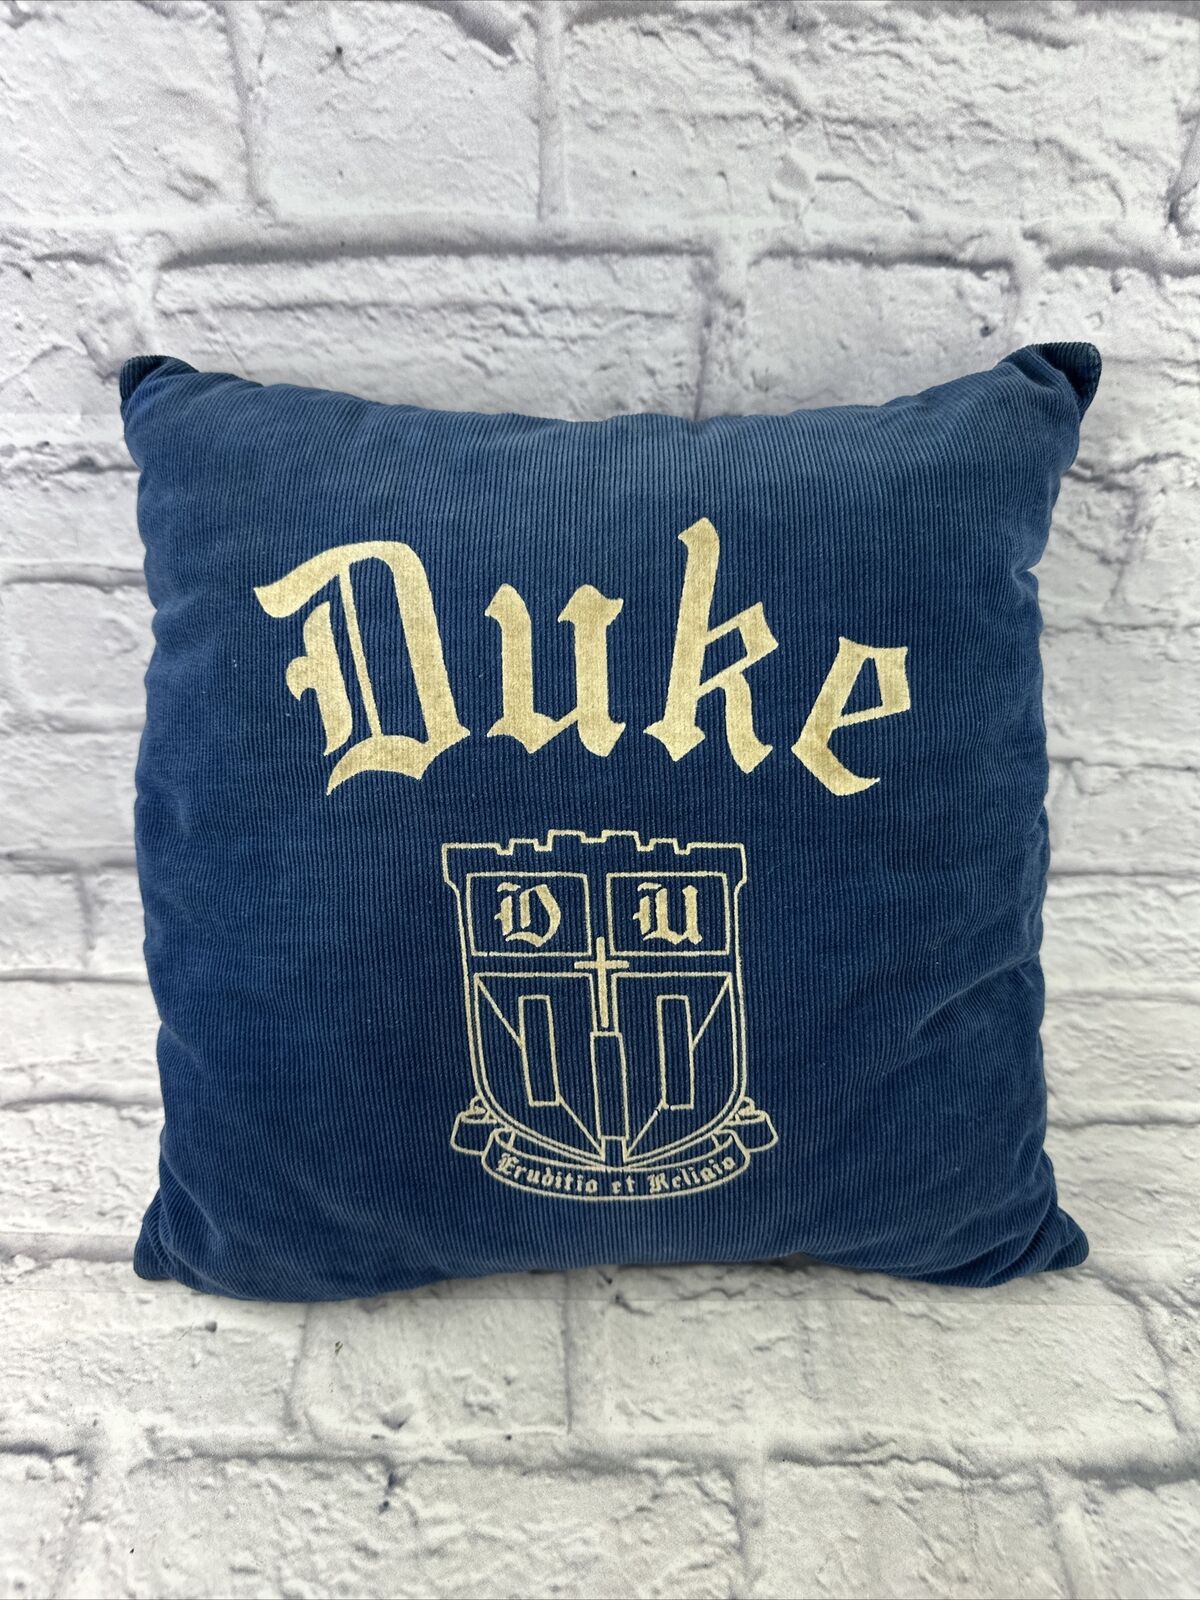 Vintage Duke university pillow 13” by 13” Rare Find Corduroy Feel.